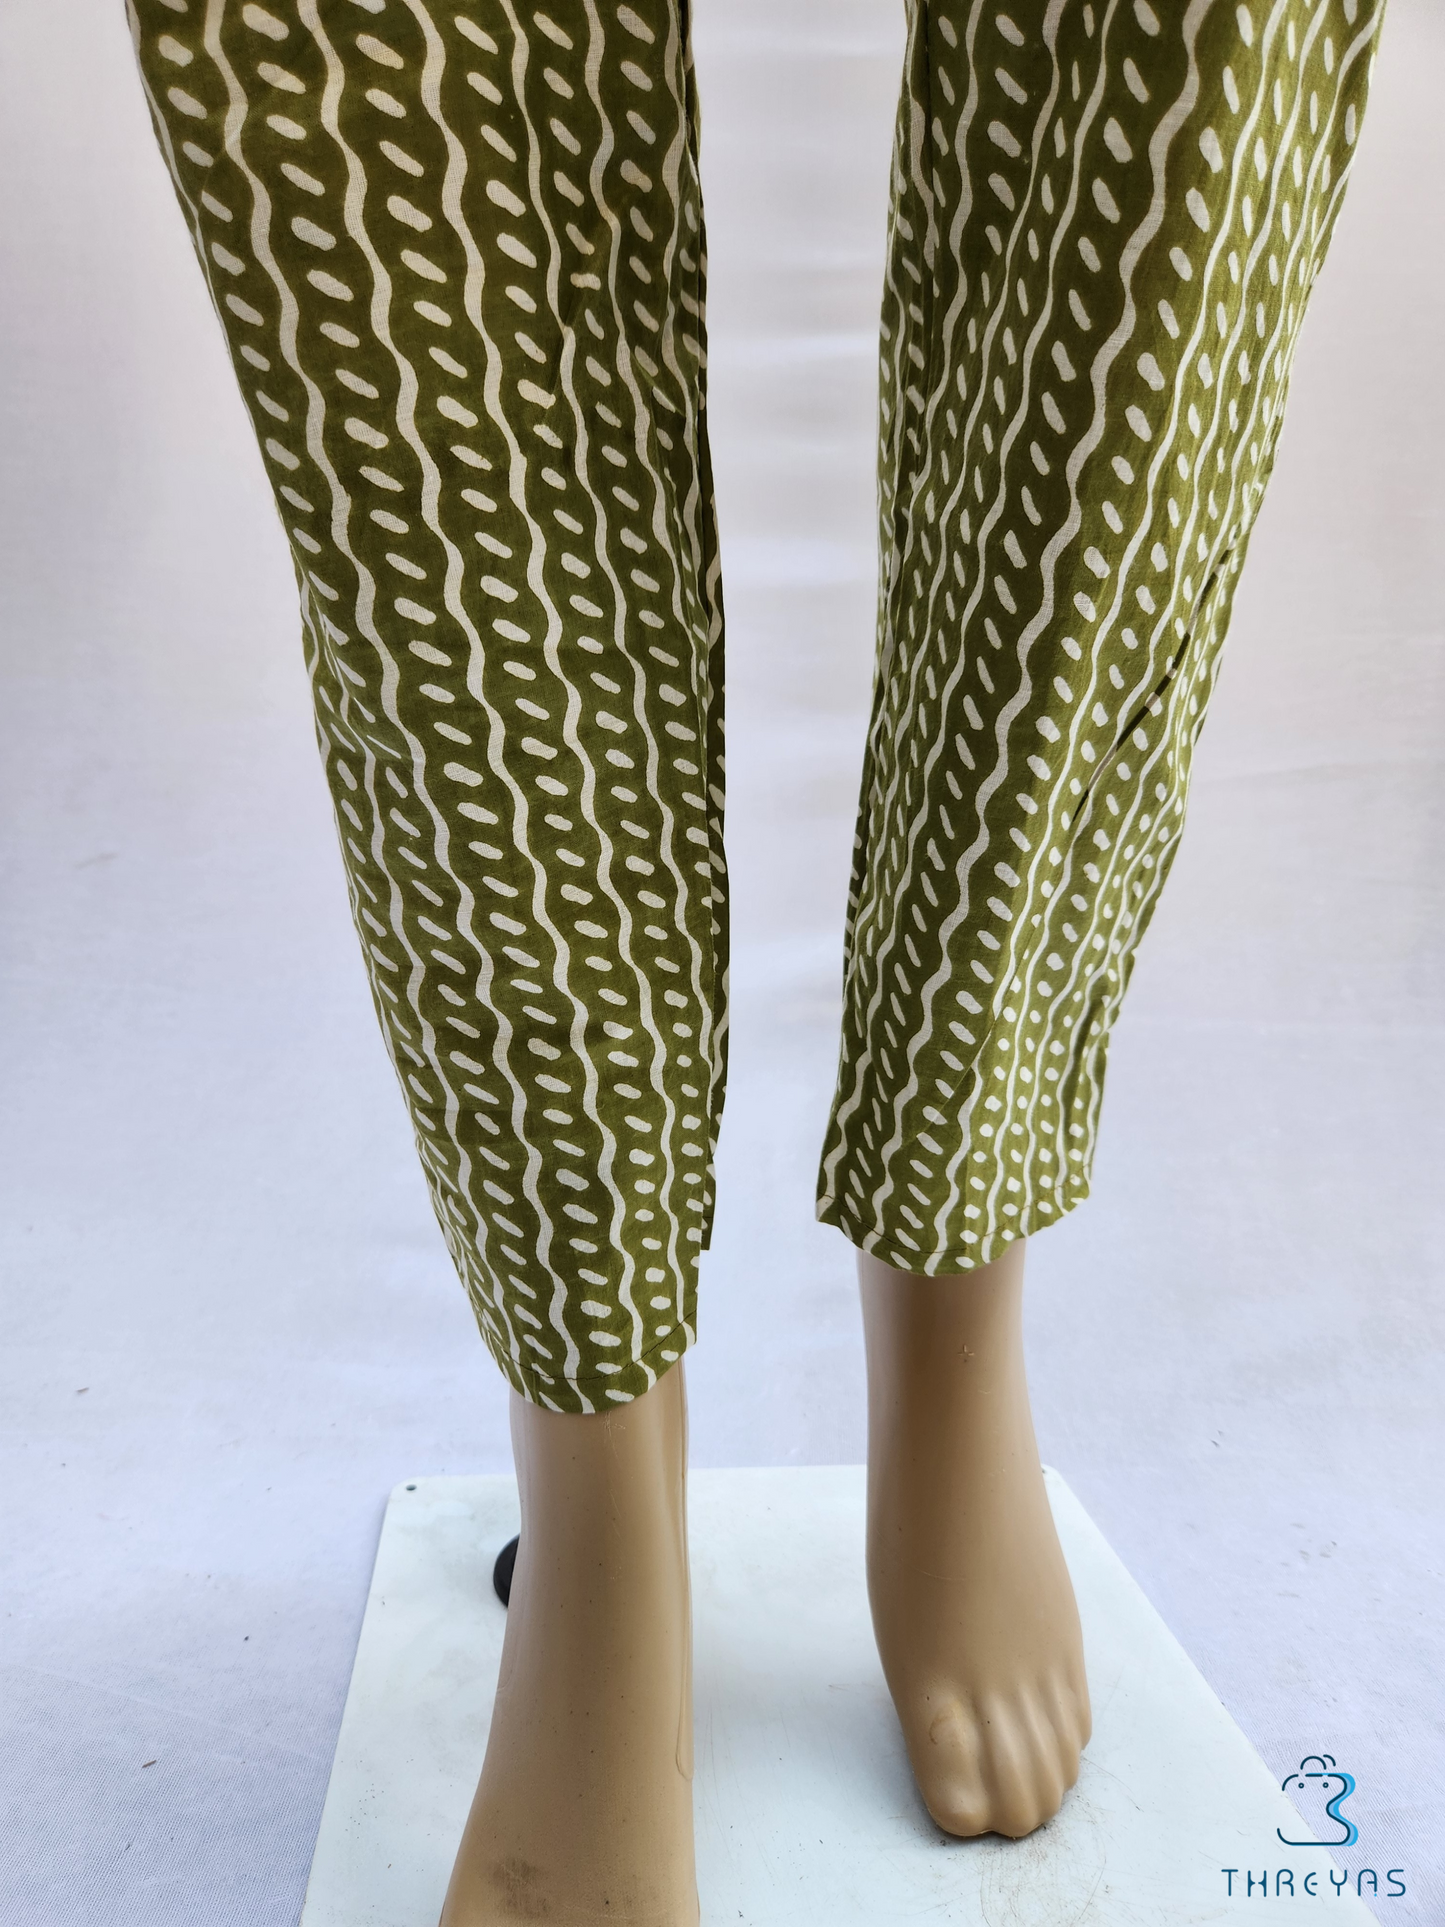 Olive Green Cotton Printed Kurthi set with Trousers for women | Stylish Kurthis & Kurtis Sets for Women | Threyas 